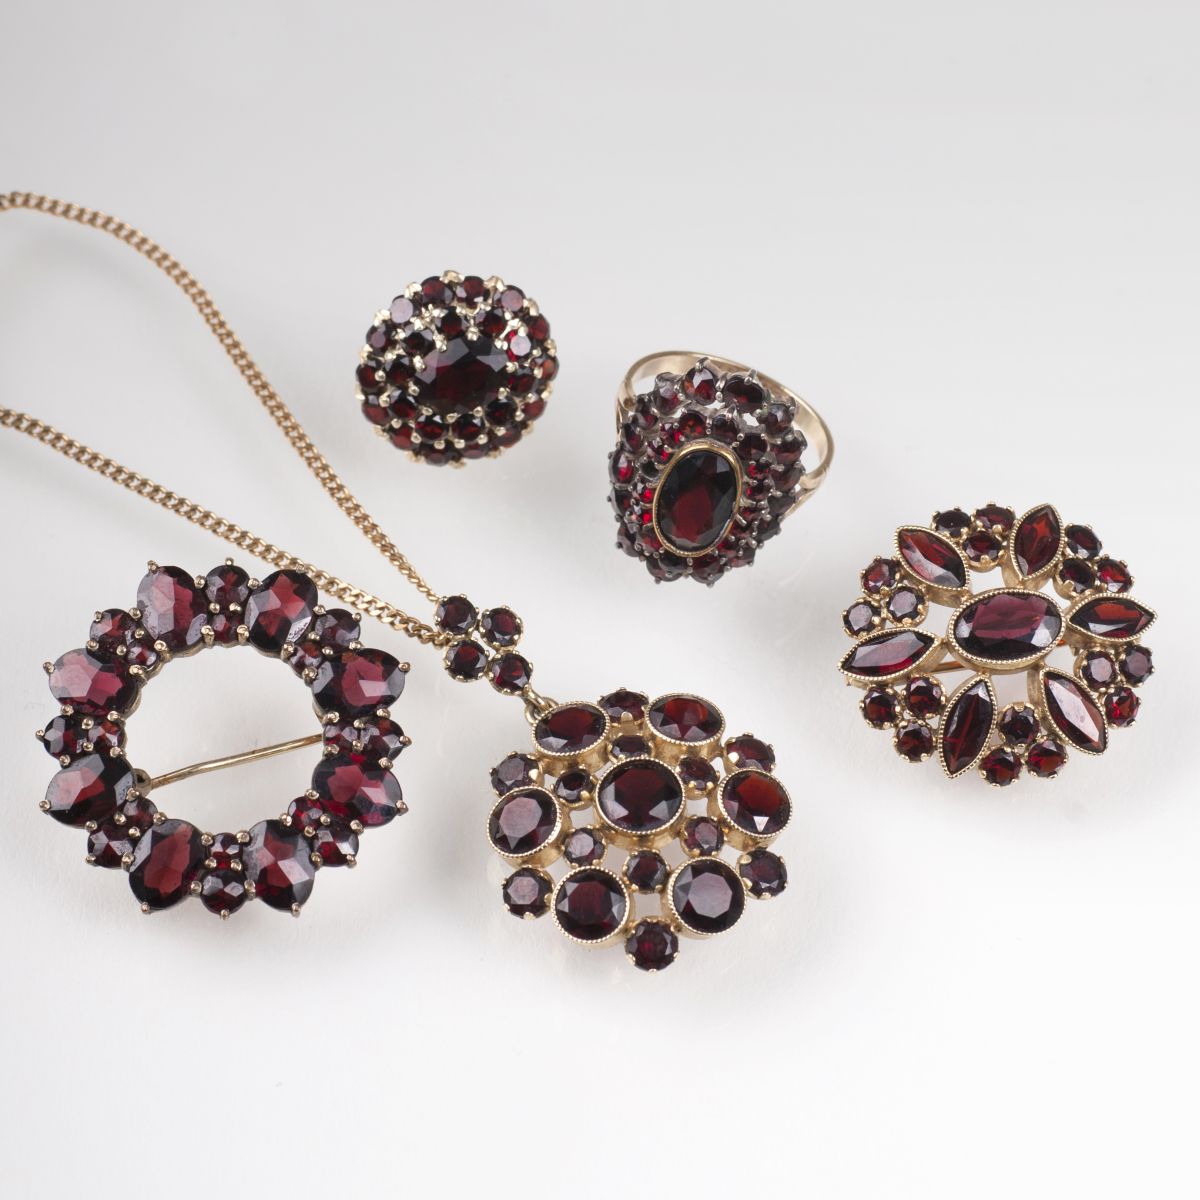 Five pieces of garnet jewelry